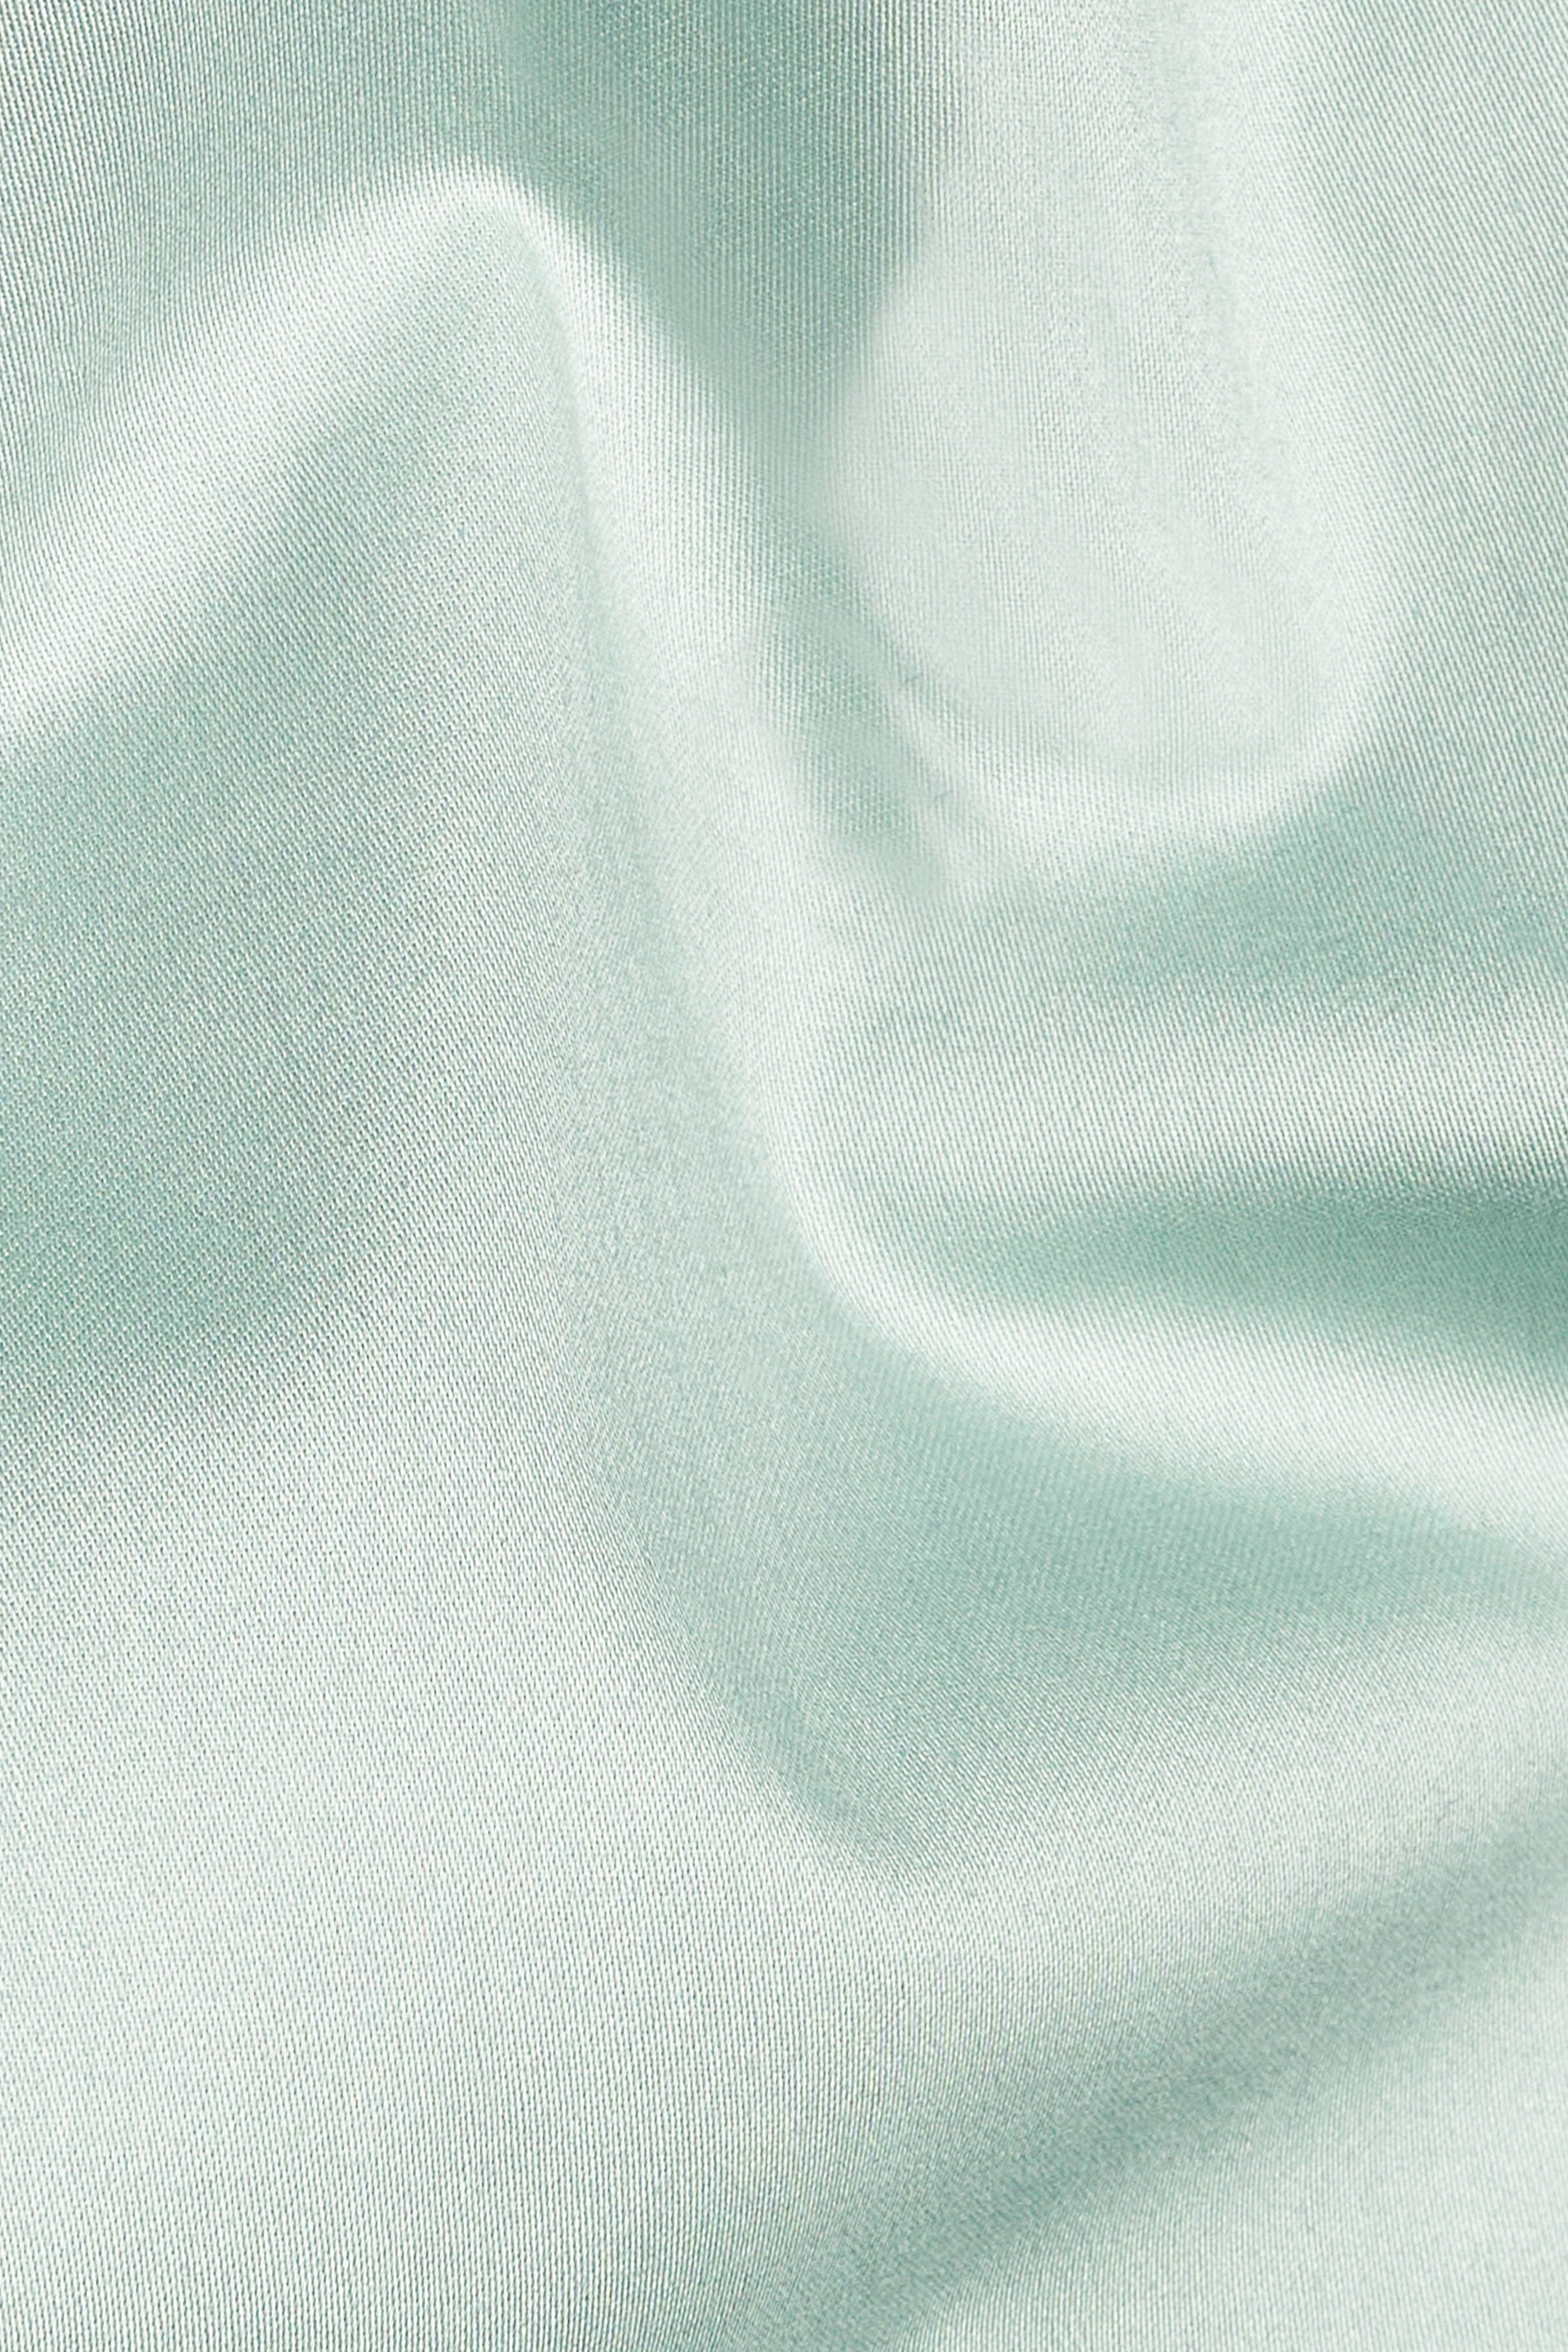 Gainsboro Green Leaves Hand Painted Super Soft Premium Cotton Designer Shirt